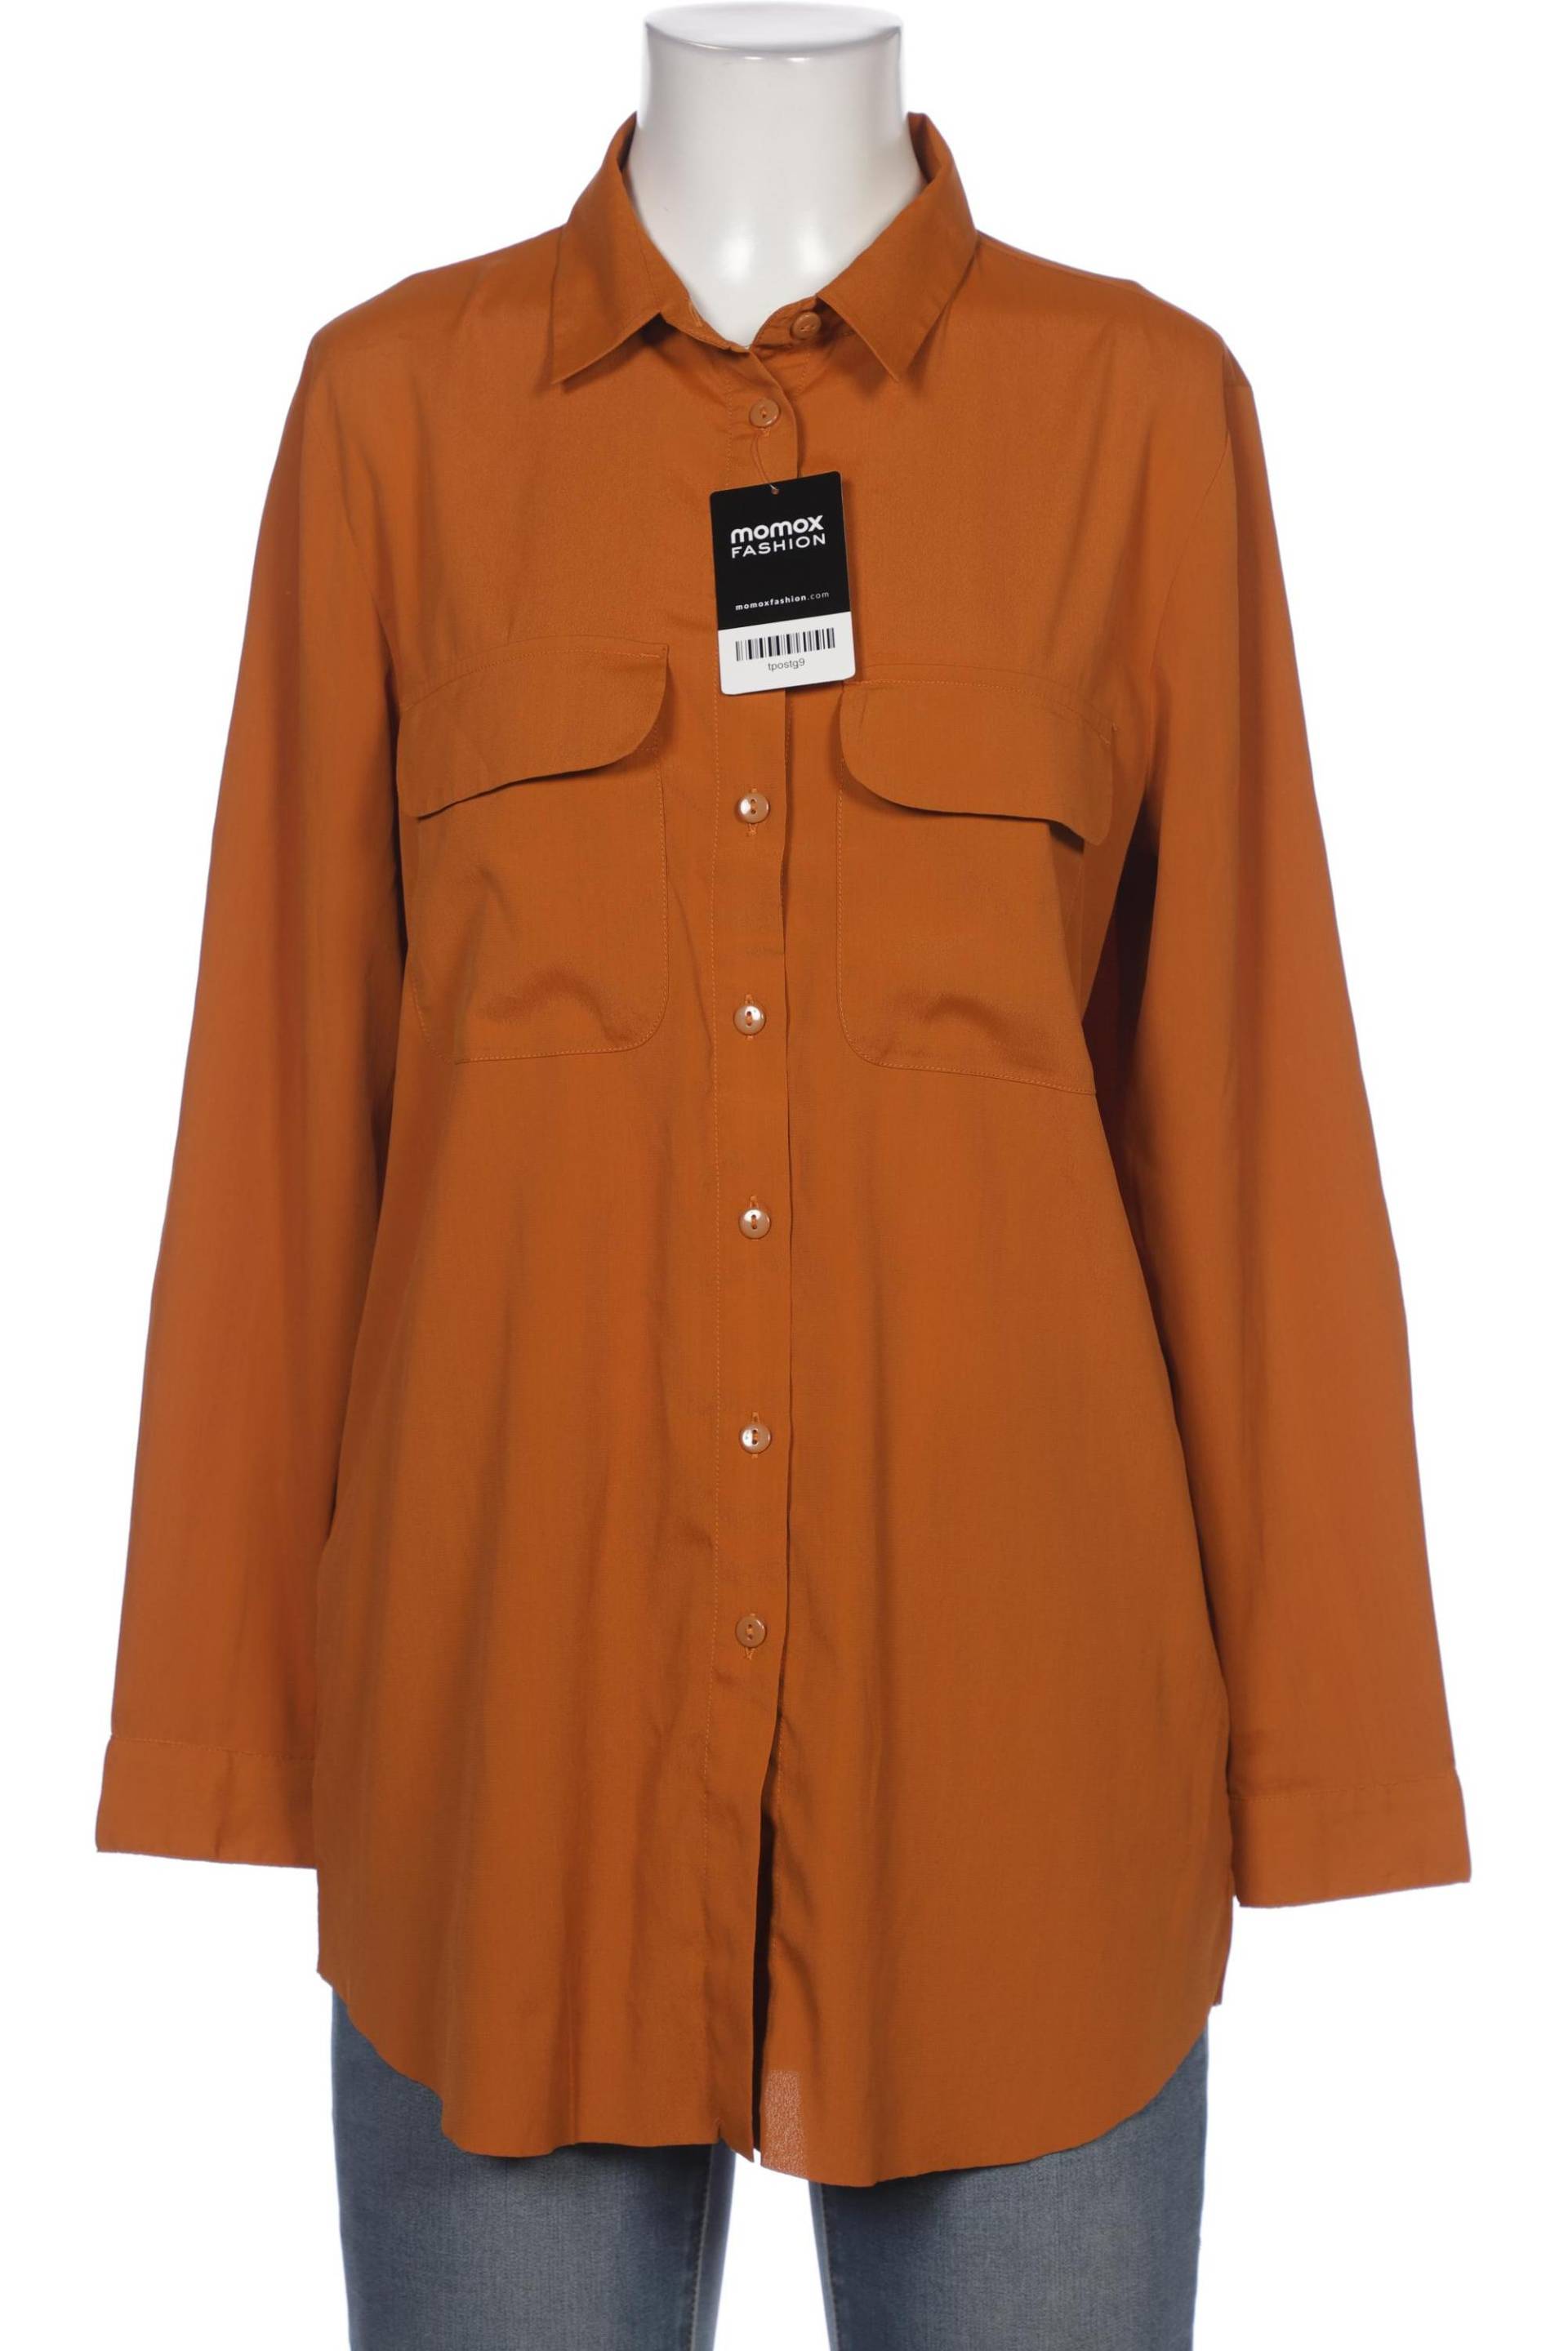 MONKI Damen Bluse, orange von Monki